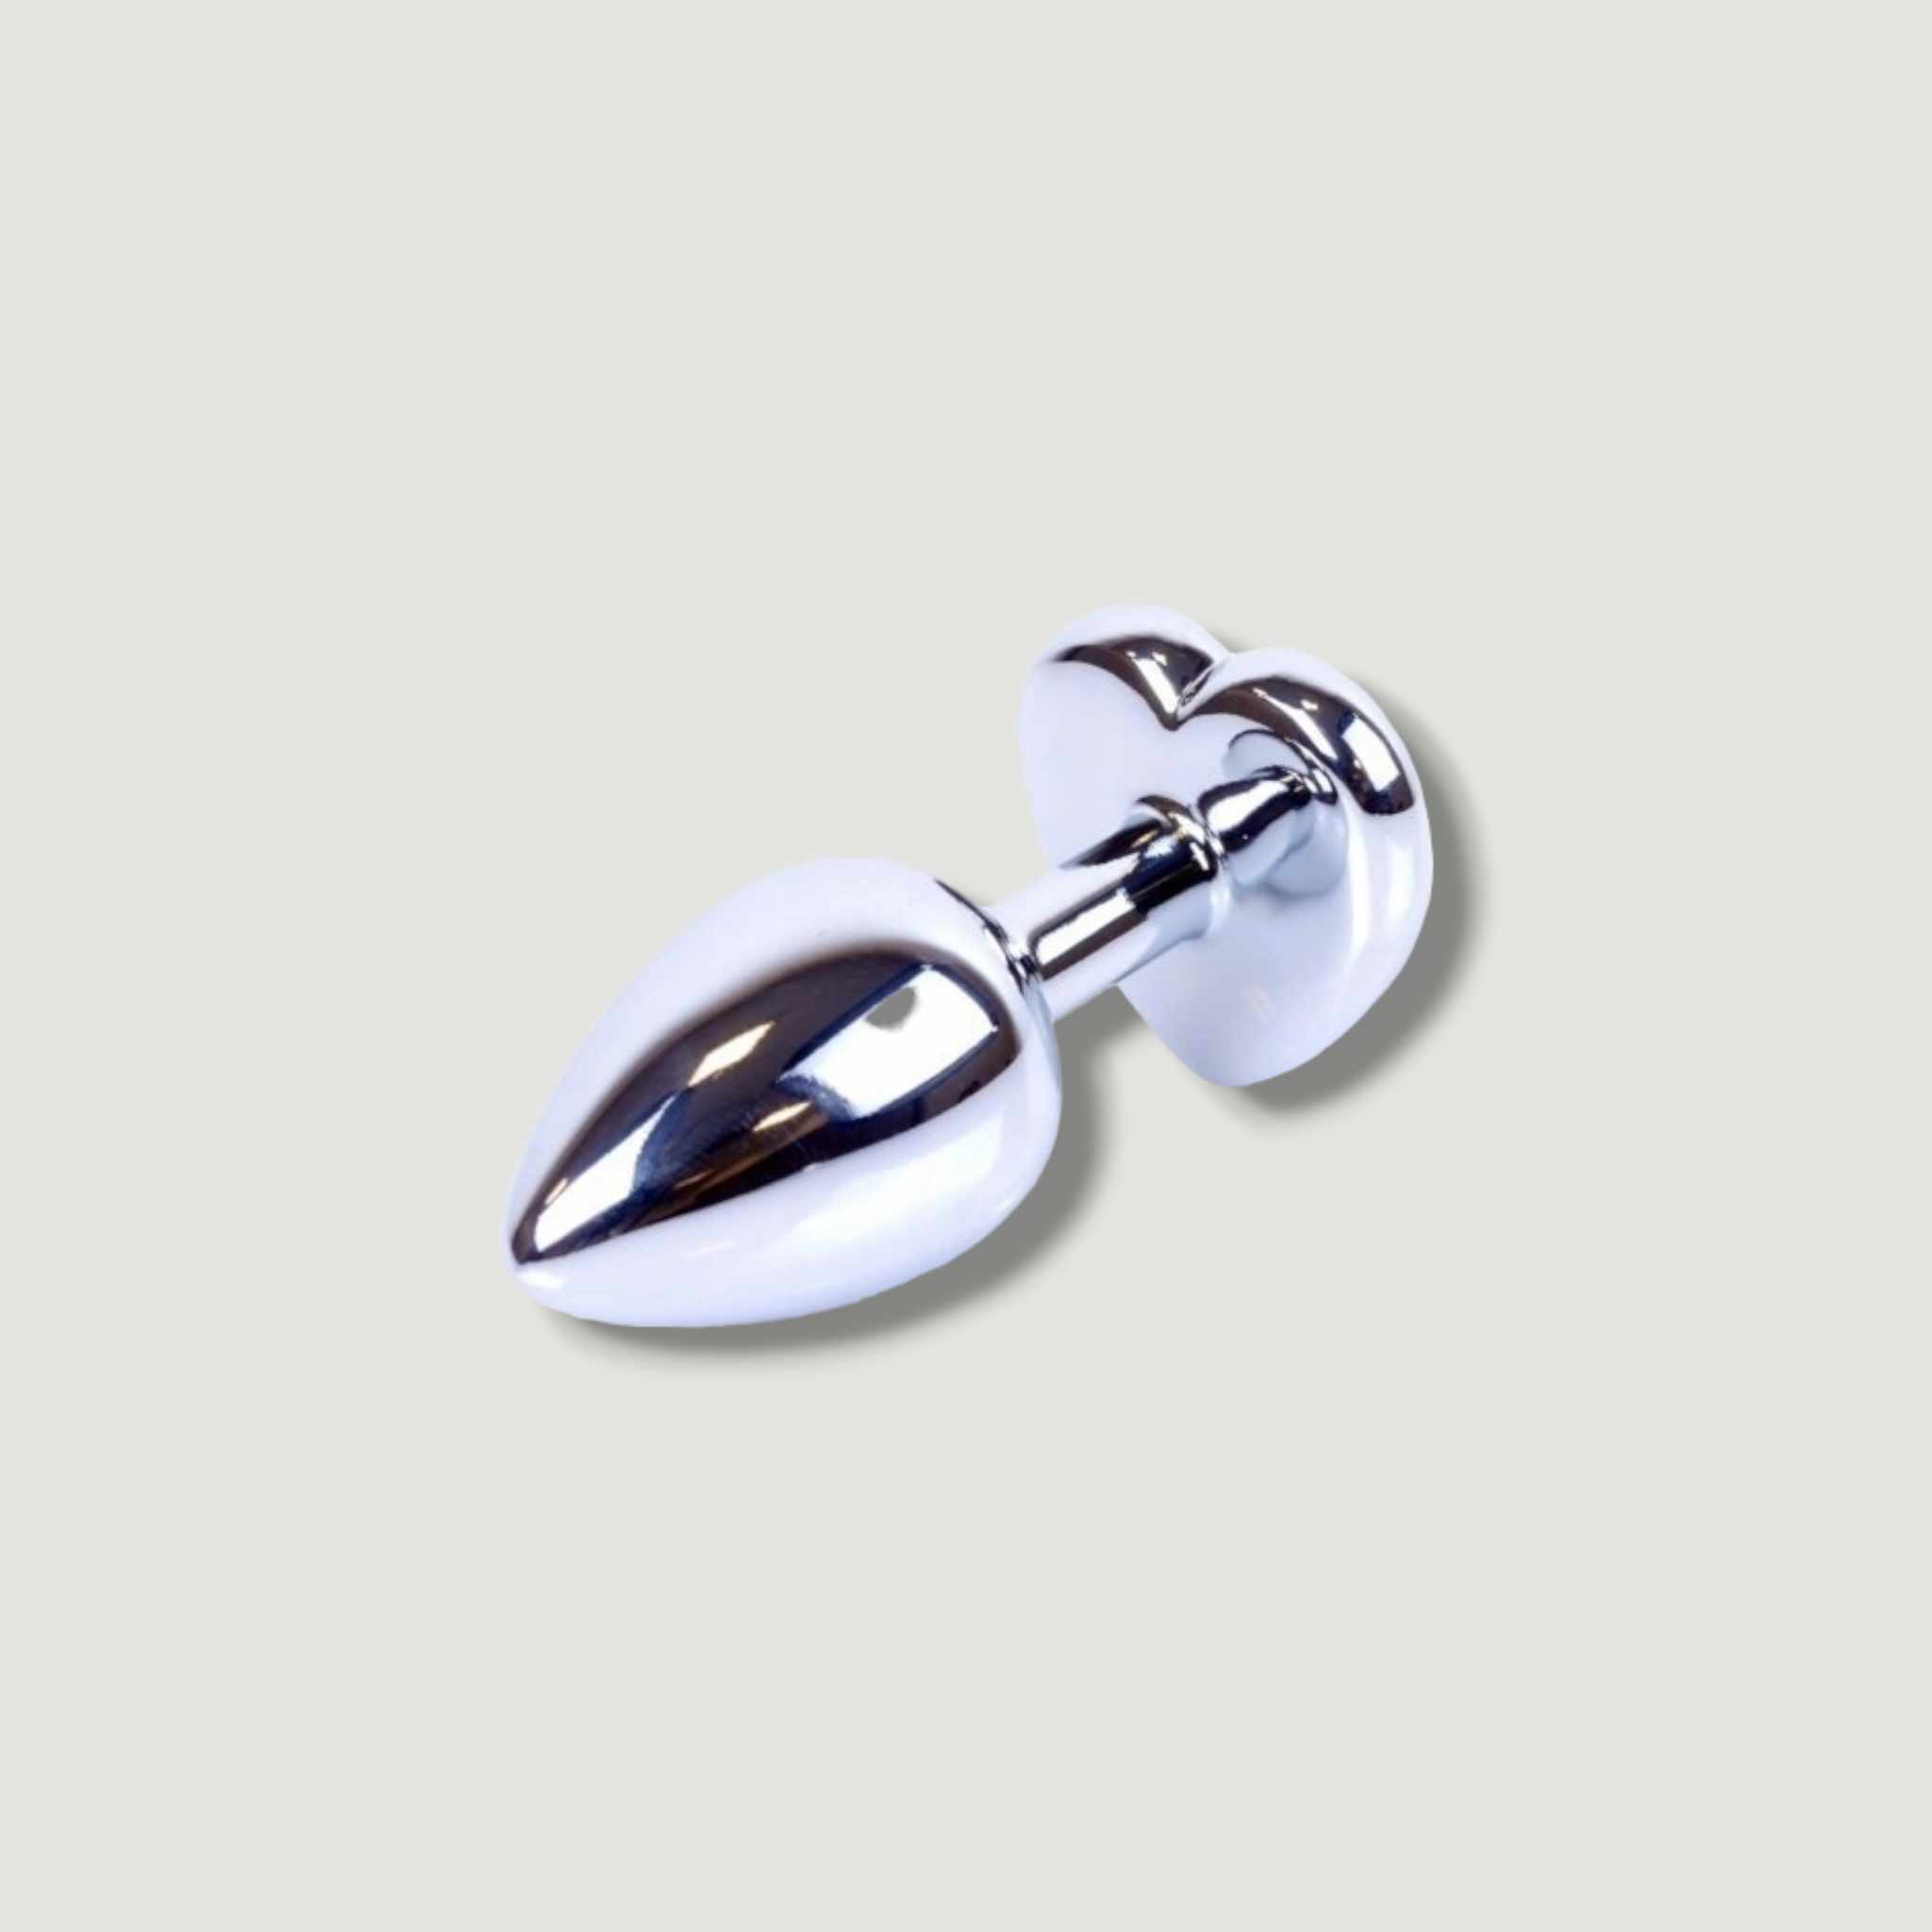 Plug- Jewellery Silver Heart PLUG- Clear